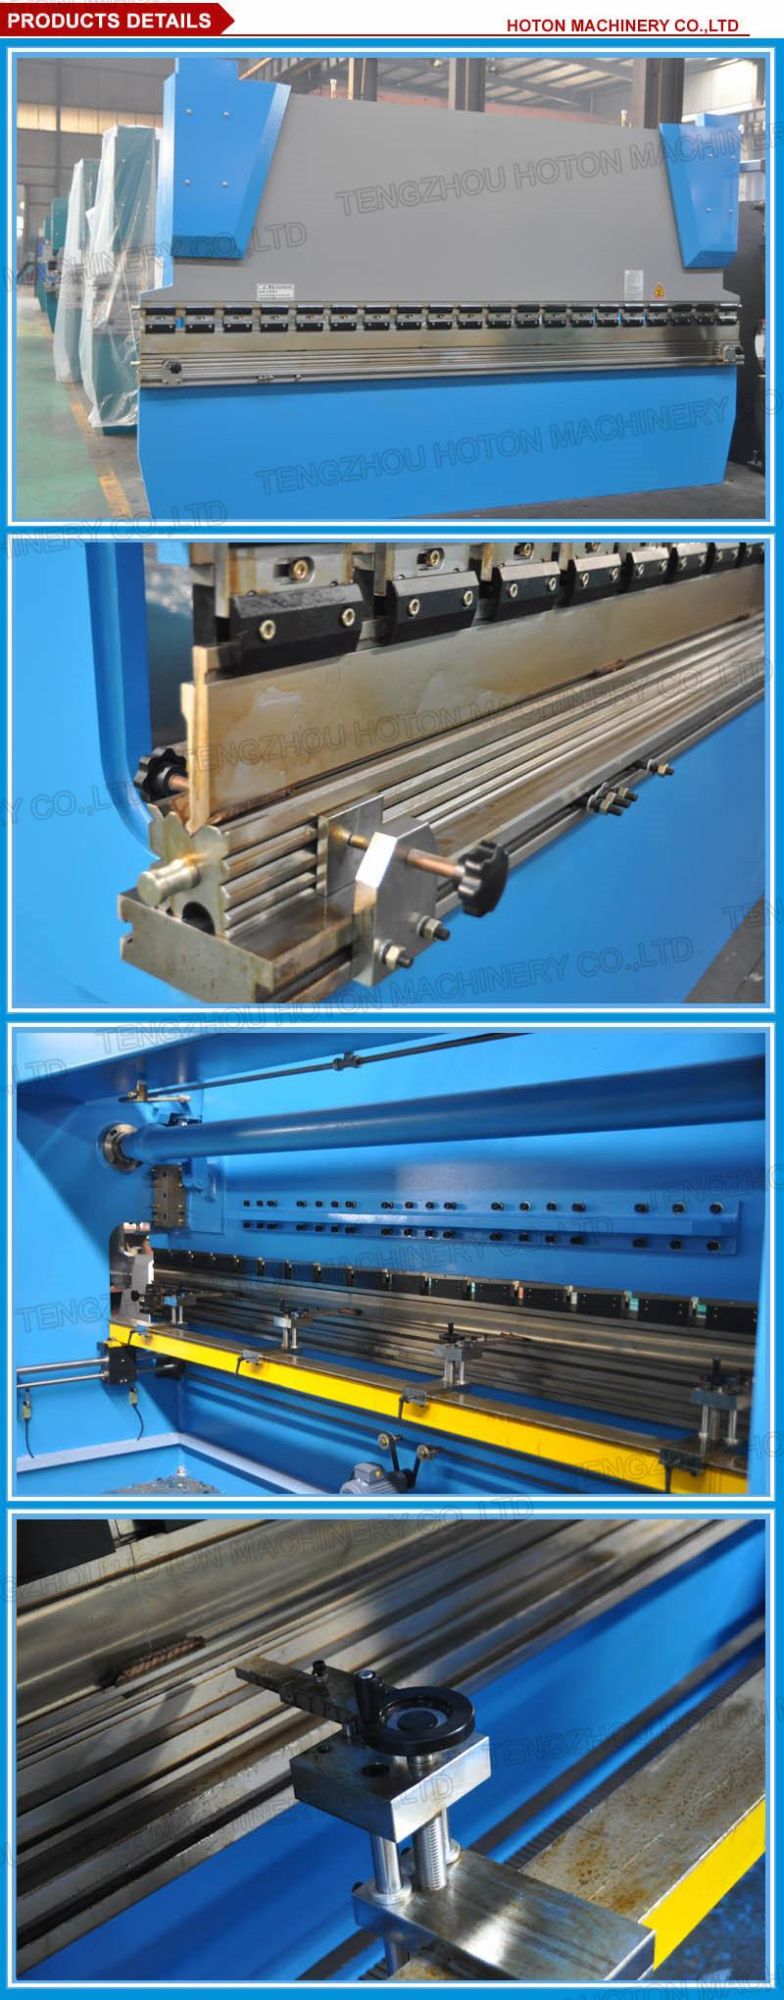 WC67Y Series Sheet Metal Press Brake Machine (Metal Bender)